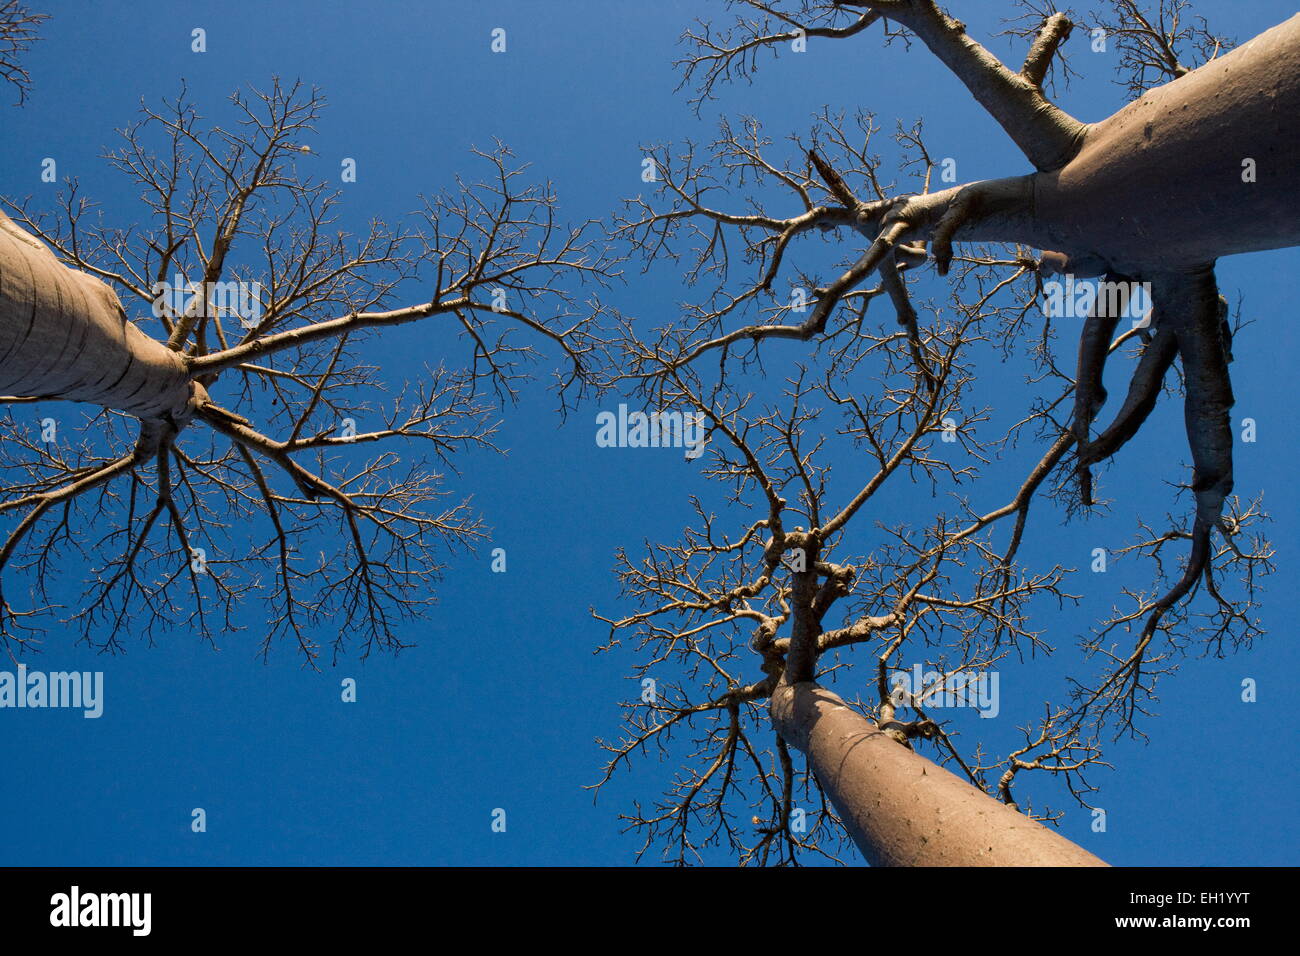 Baobab flower icon isometric vector. African tree. Angola trunk Stock  Vector Image & Art - Alamy